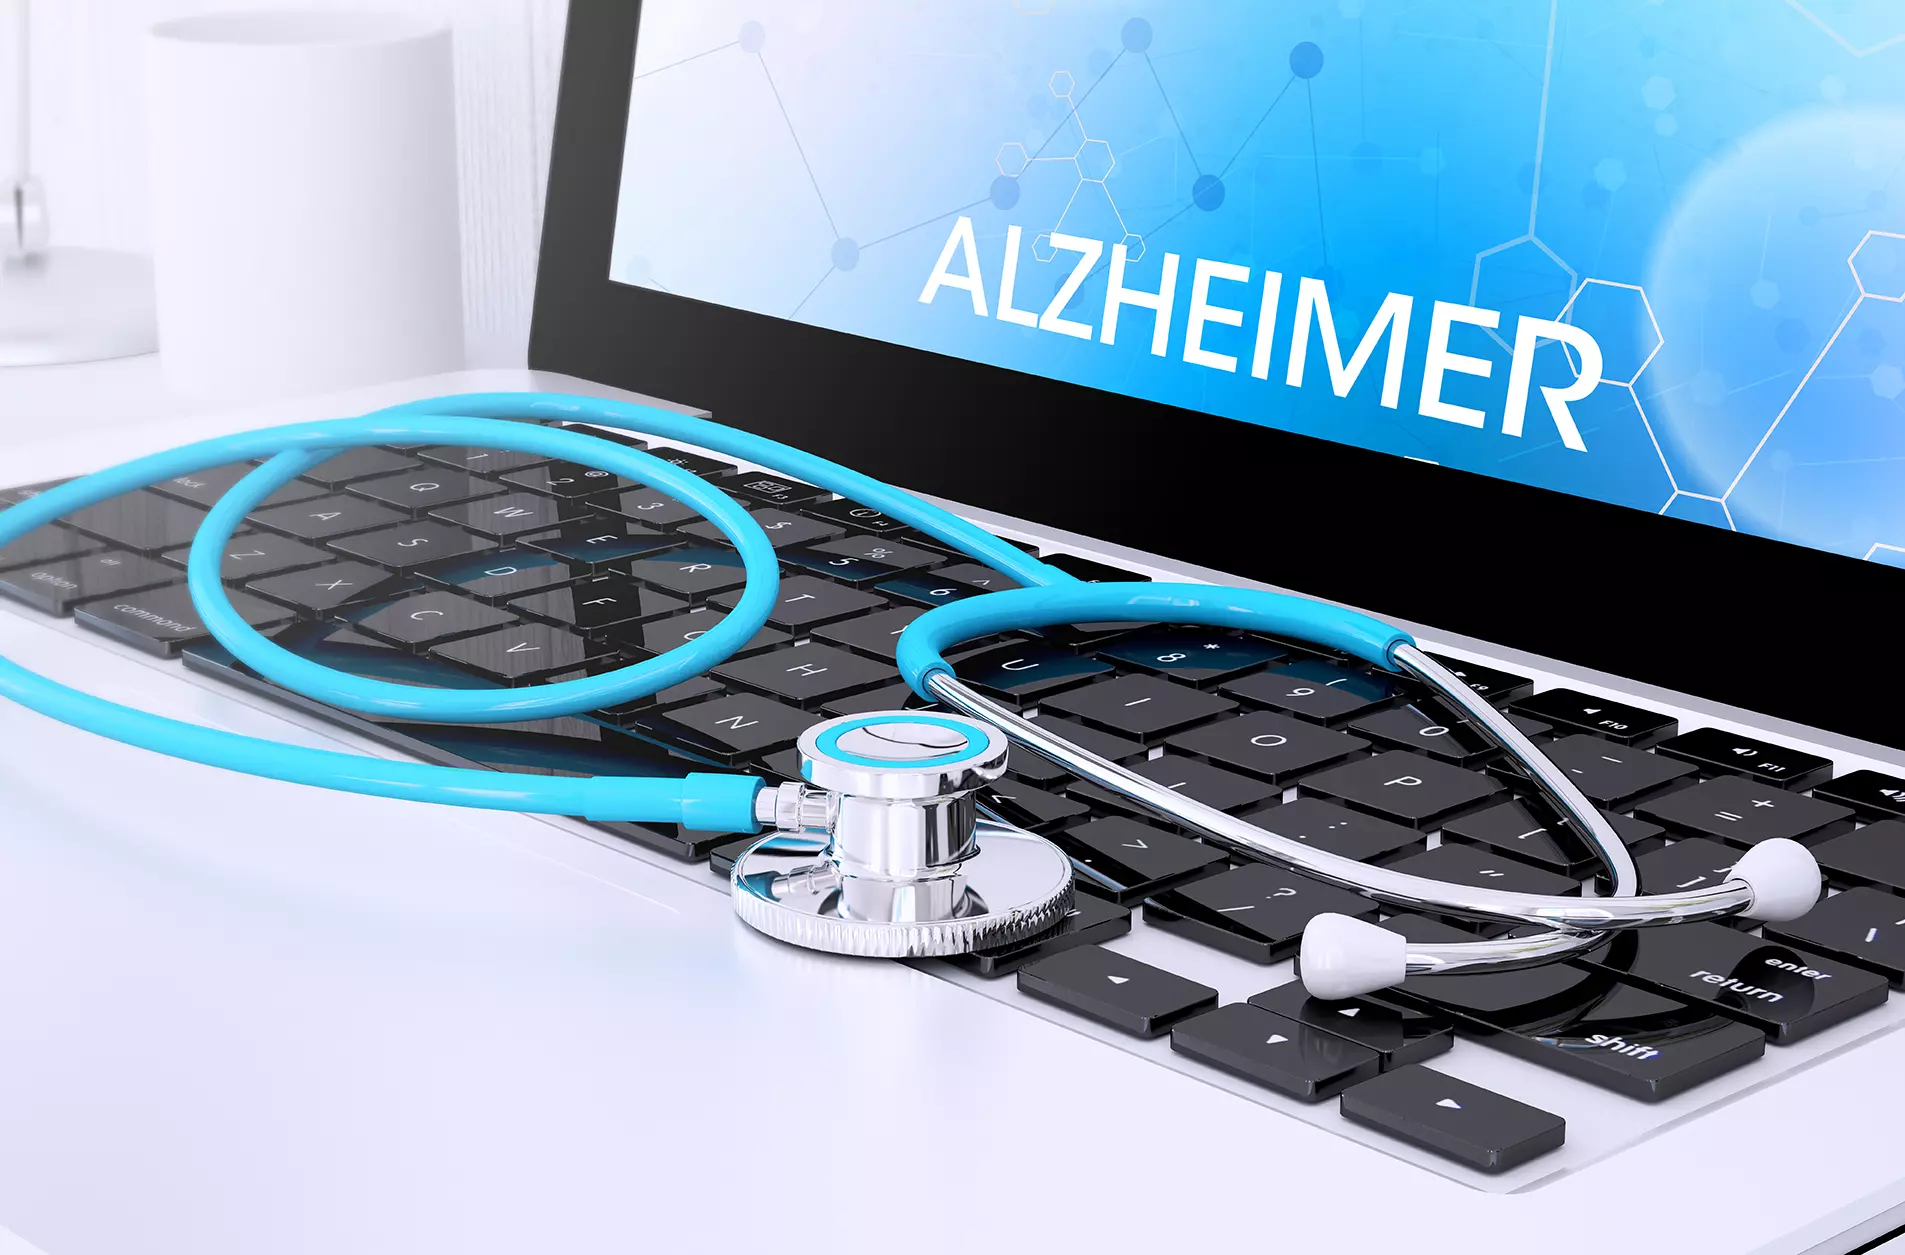 Computadora sobre el teclado un estetoscopio en la pantalla la palabra alzheimer, representando que los investigadores entrenan Inteligencia Artificial para detectar Alzheimer.